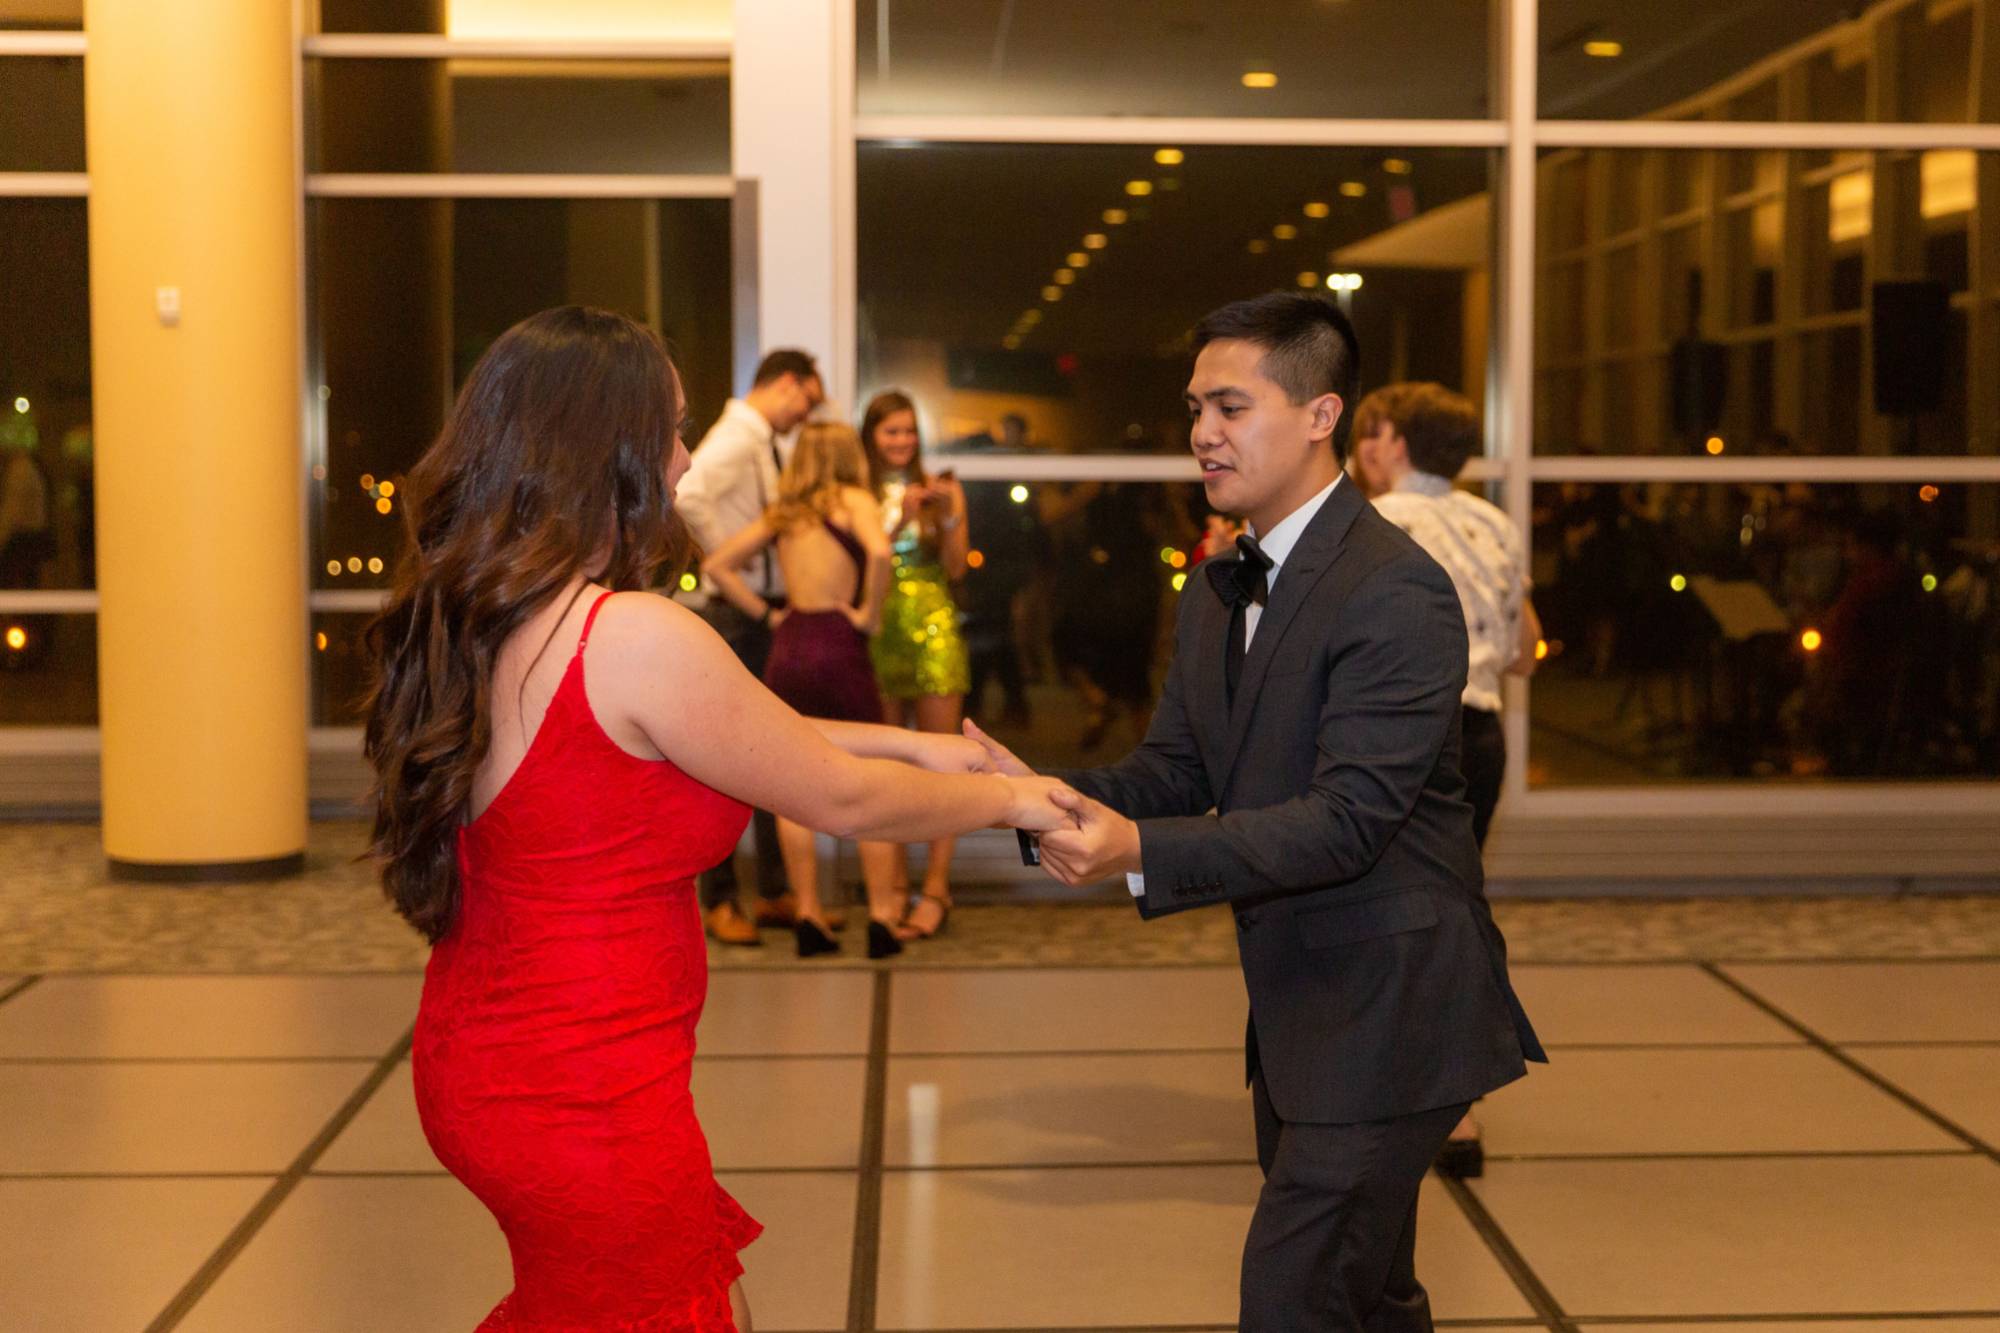 Students swing dancing at Presidents' Ball